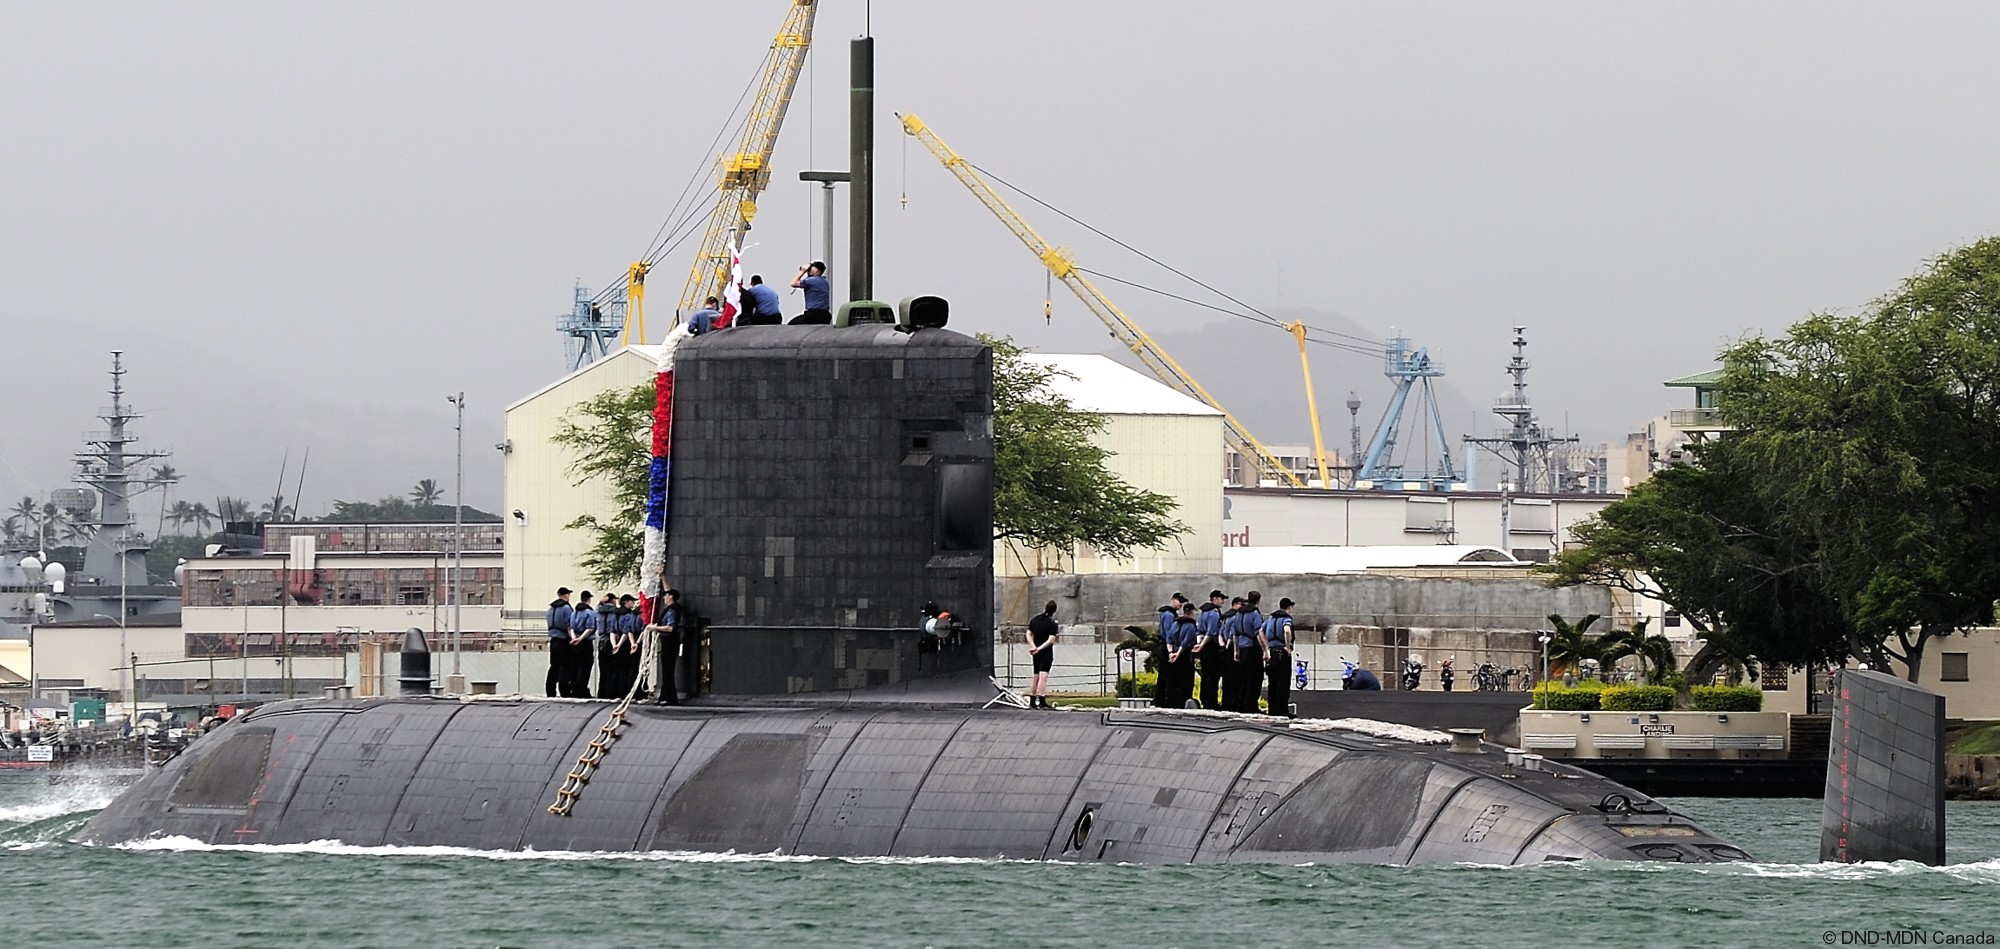 ssk-876 hmcs victoria upholder class attack submarine hunter killer ncsm royal canadian navy 40